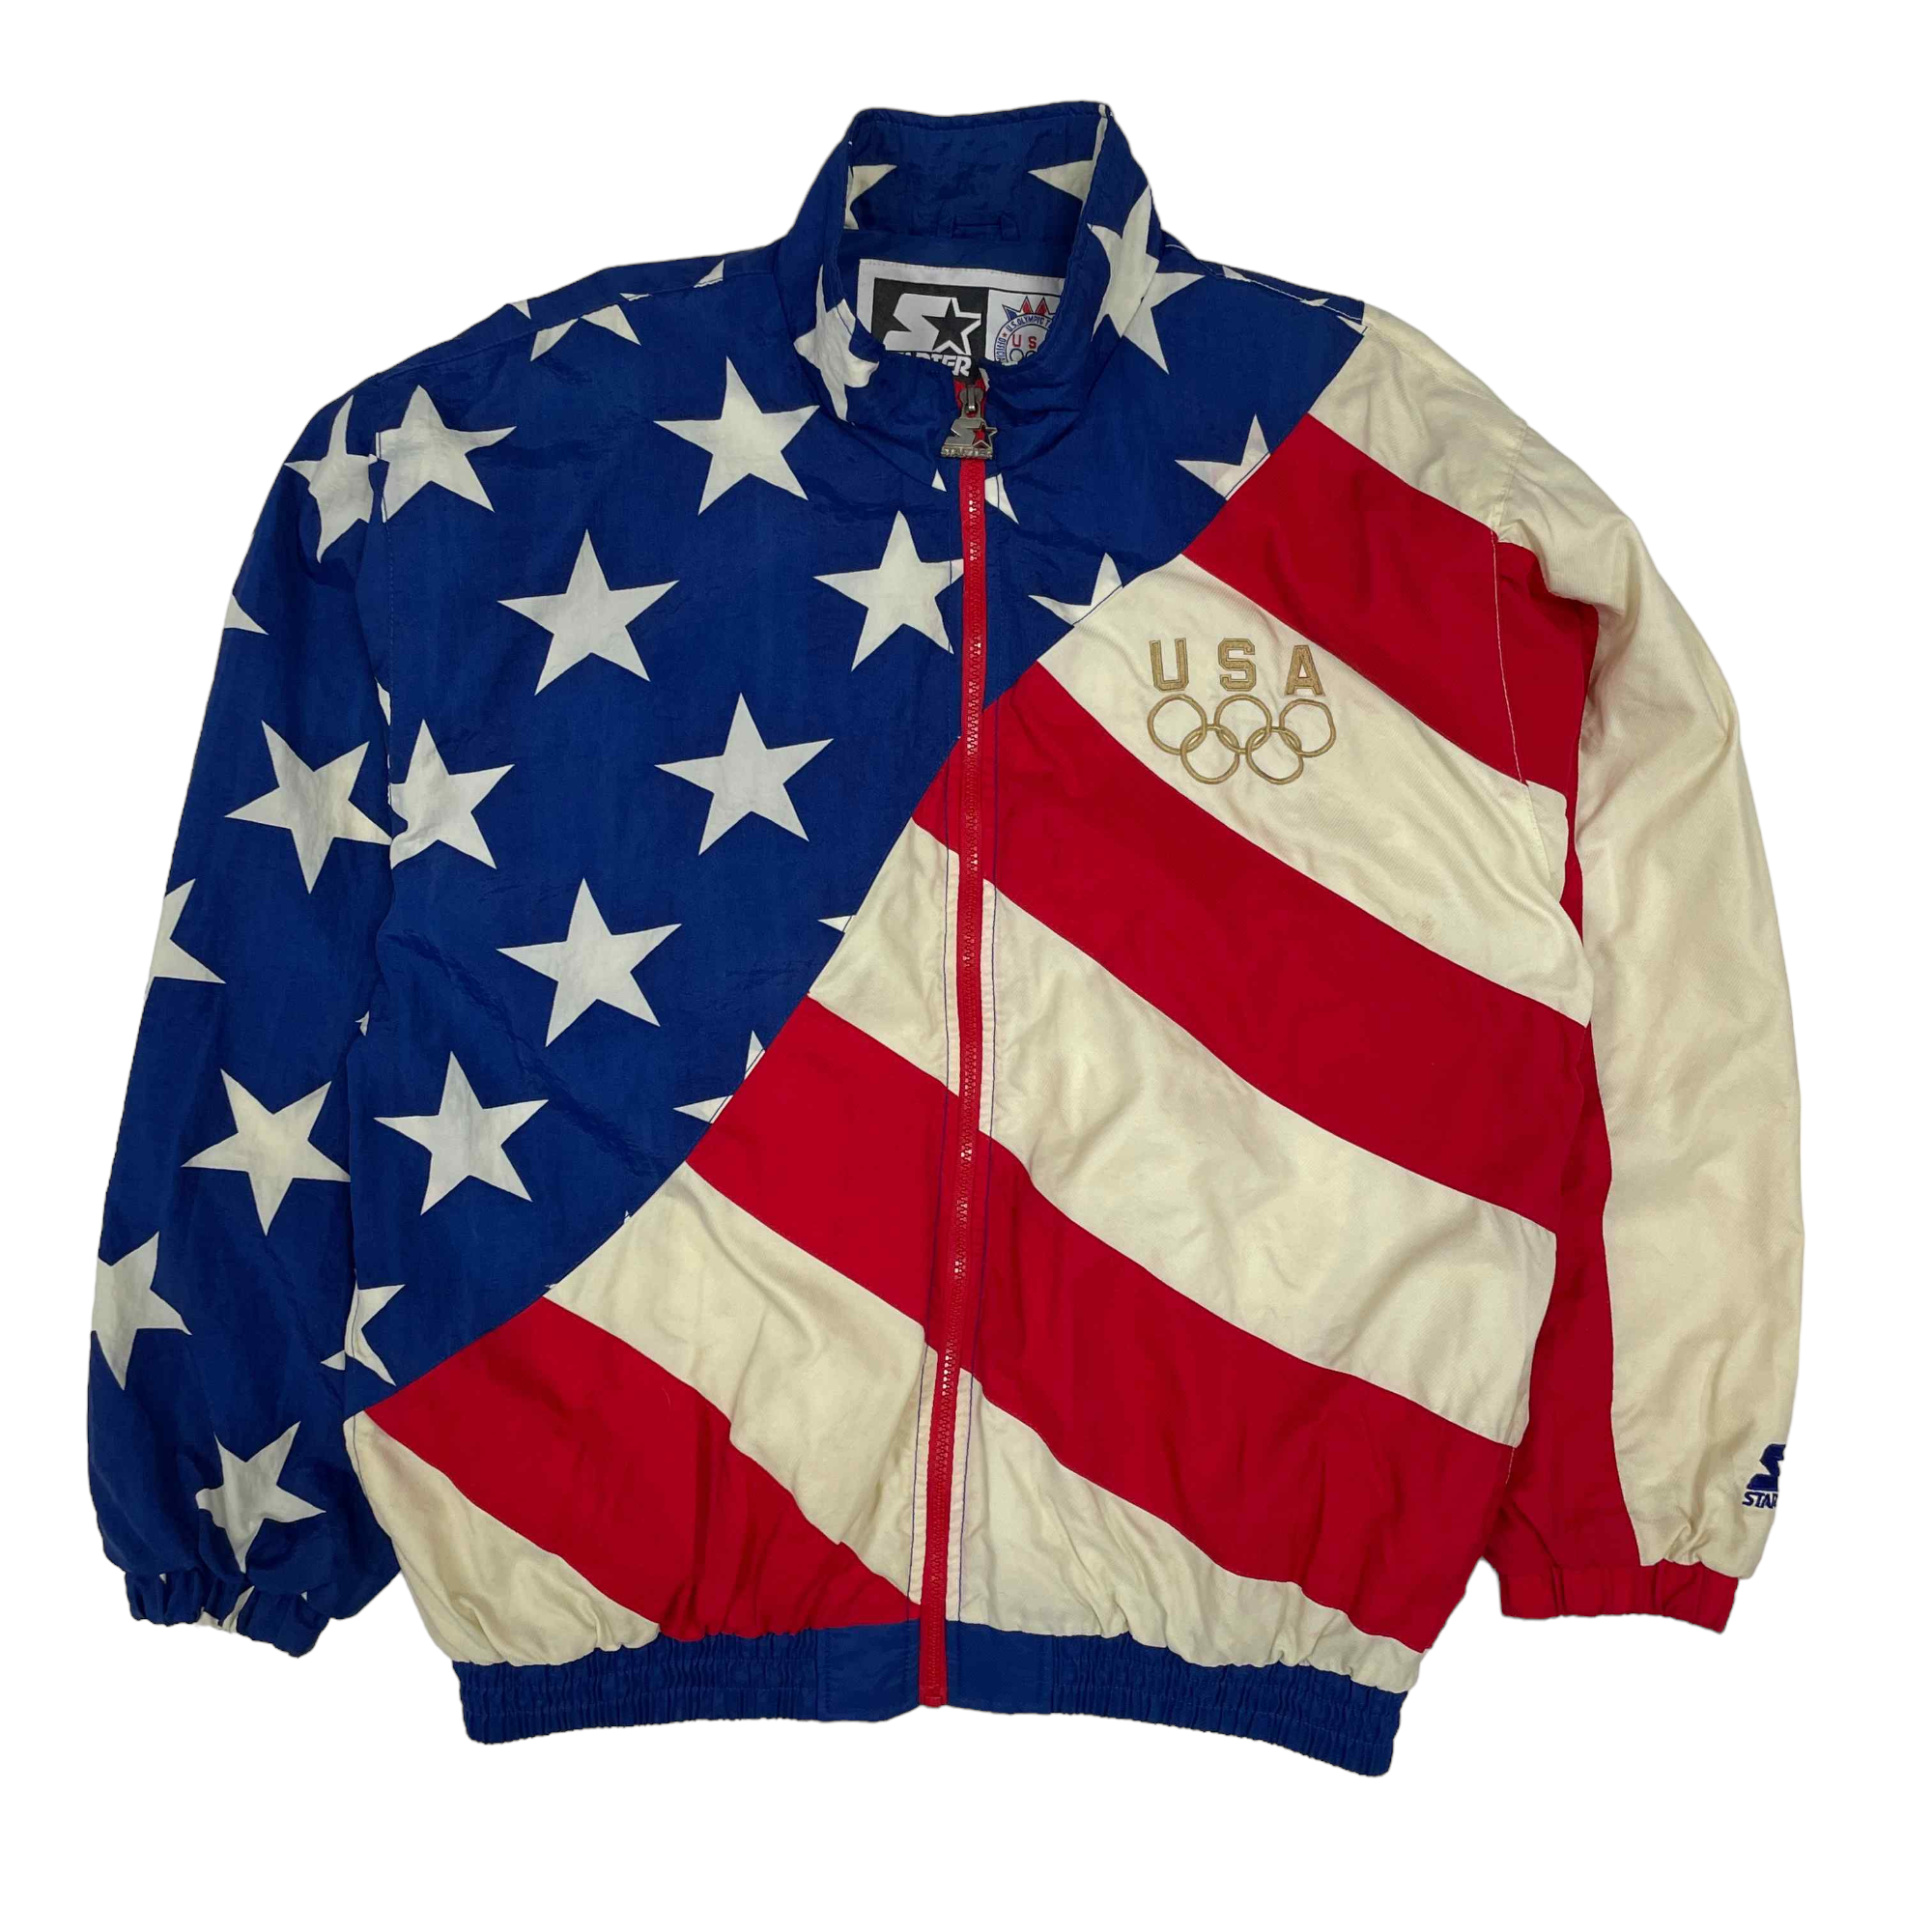 90's Starter USA Olympics Track Jacket - Large